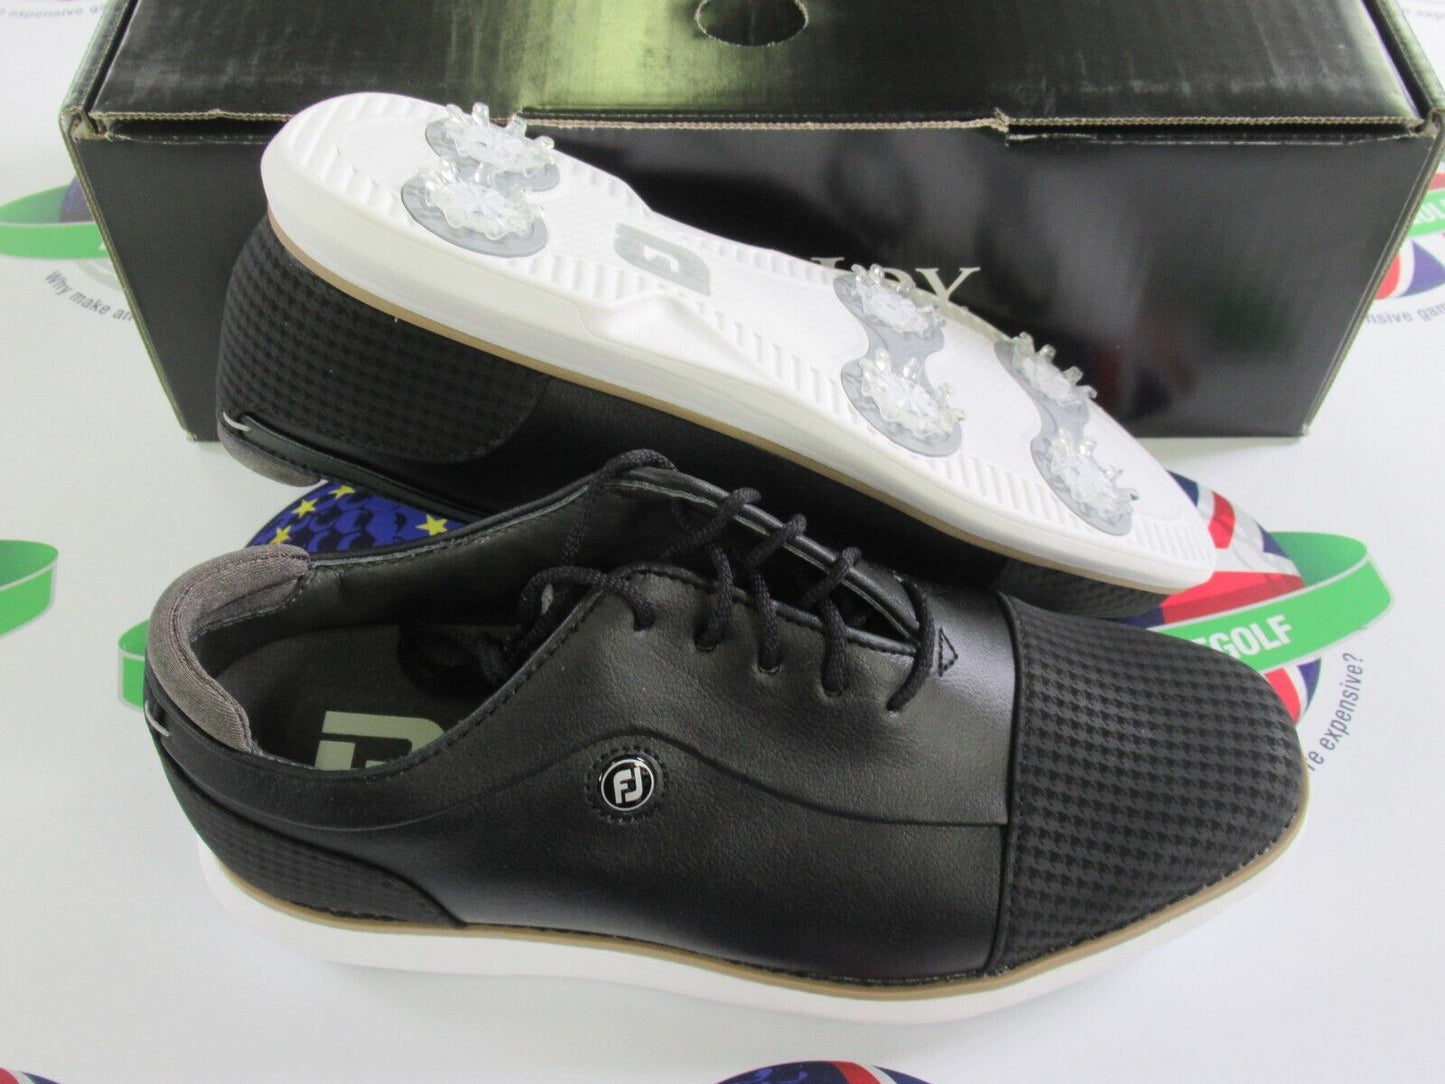 footjoy fj traditions womens golf shoes 97917k black uk size 6 wide/large